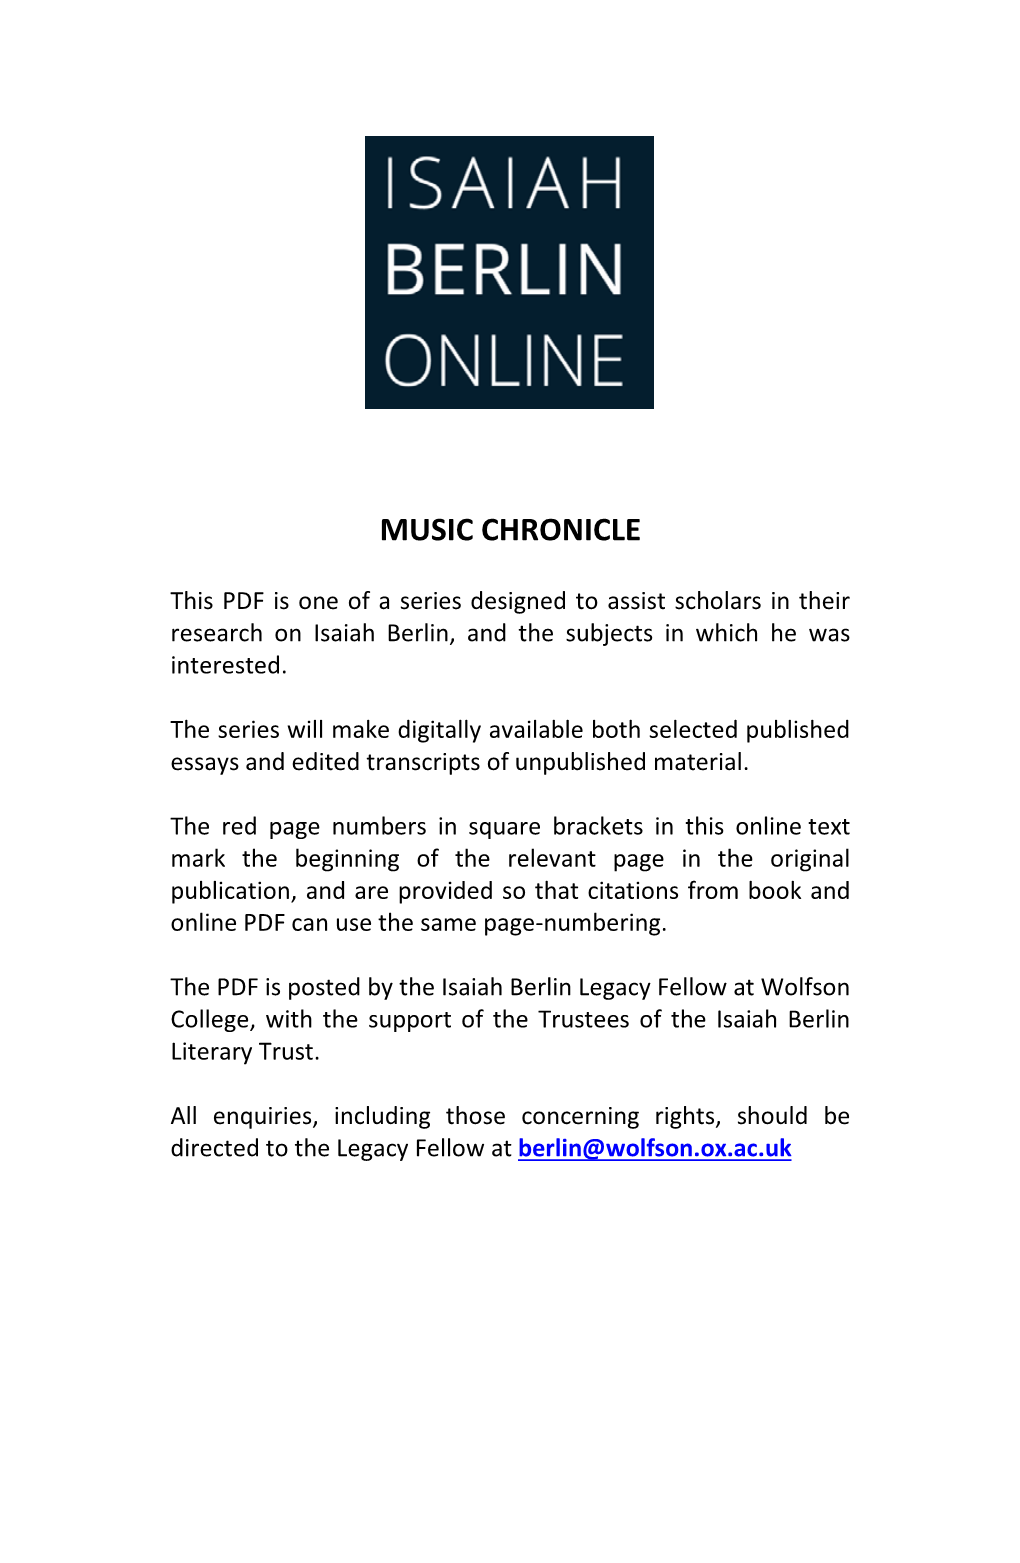 Music Chronicle